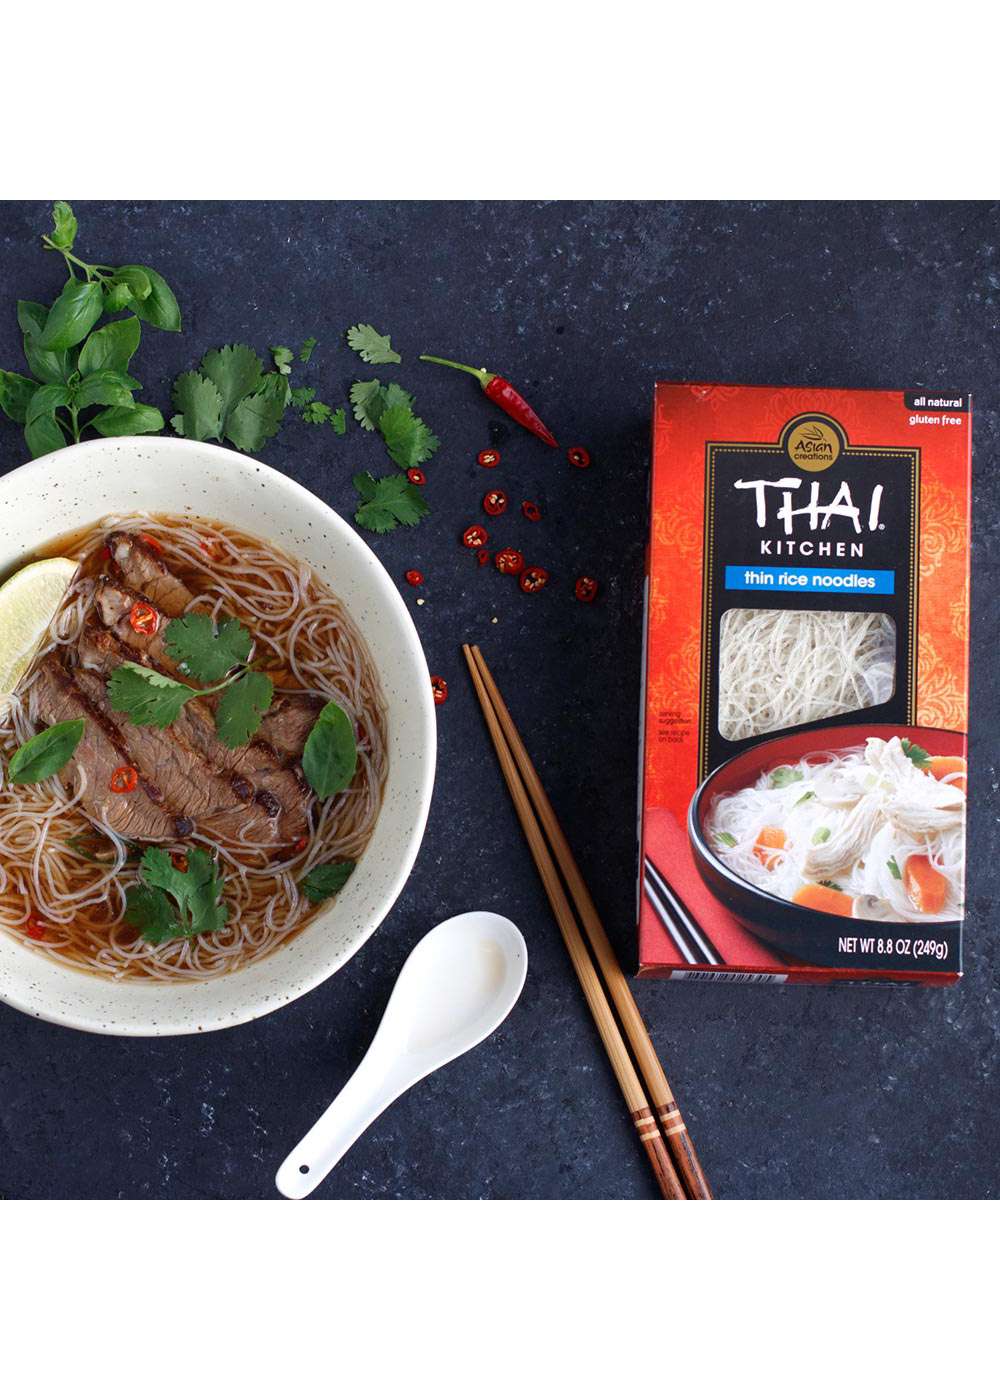 Thai Kitchen Gluten Free Thin Rice Noodles; image 9 of 9